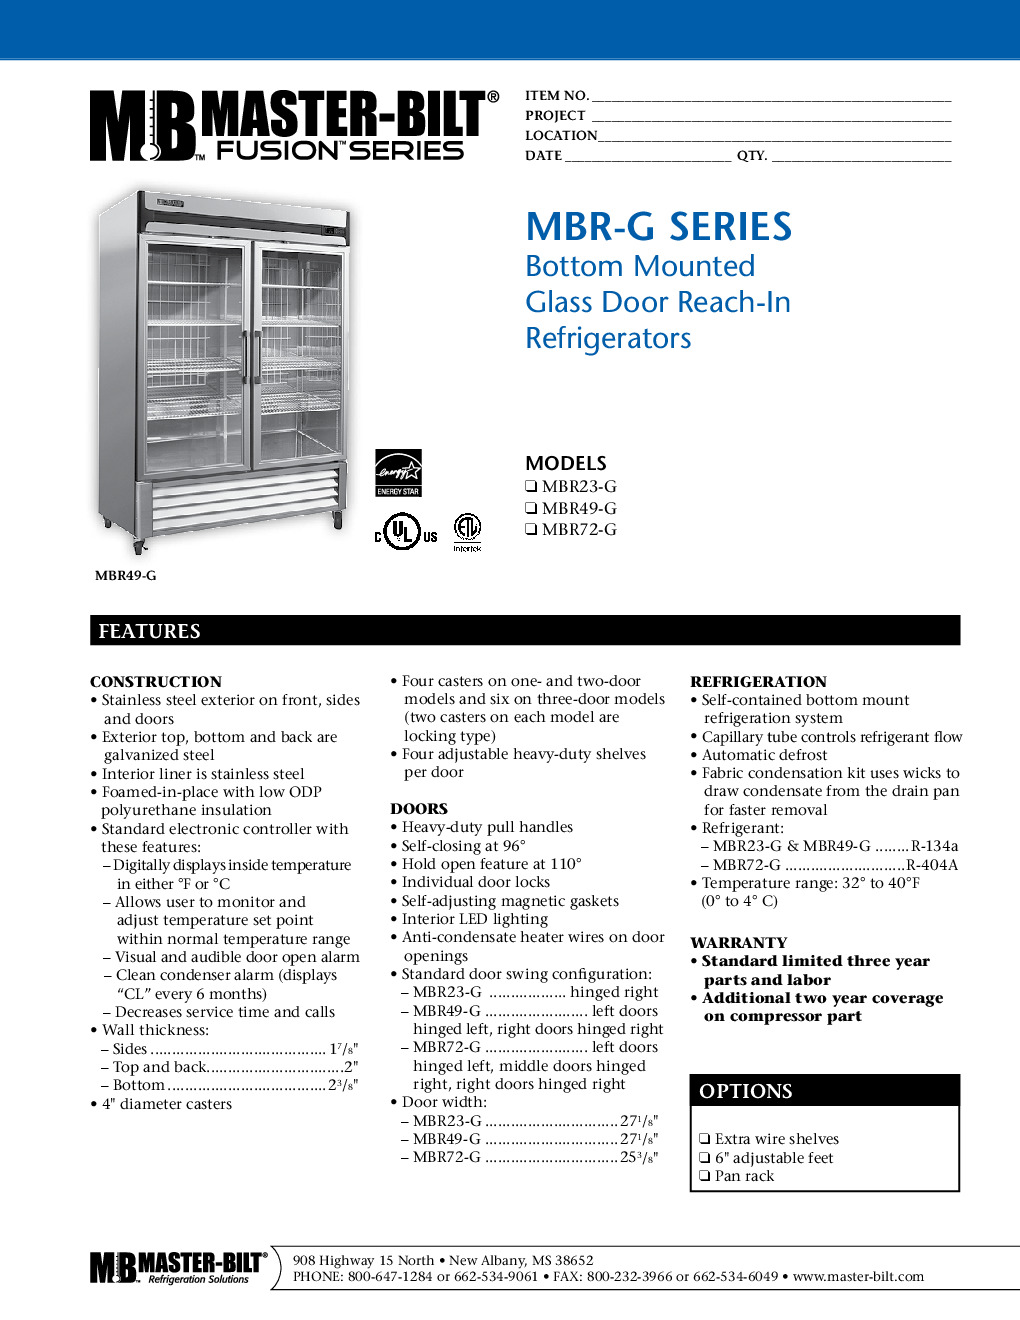 Master-Bilt MBR49-G Reach-In Refrigerator